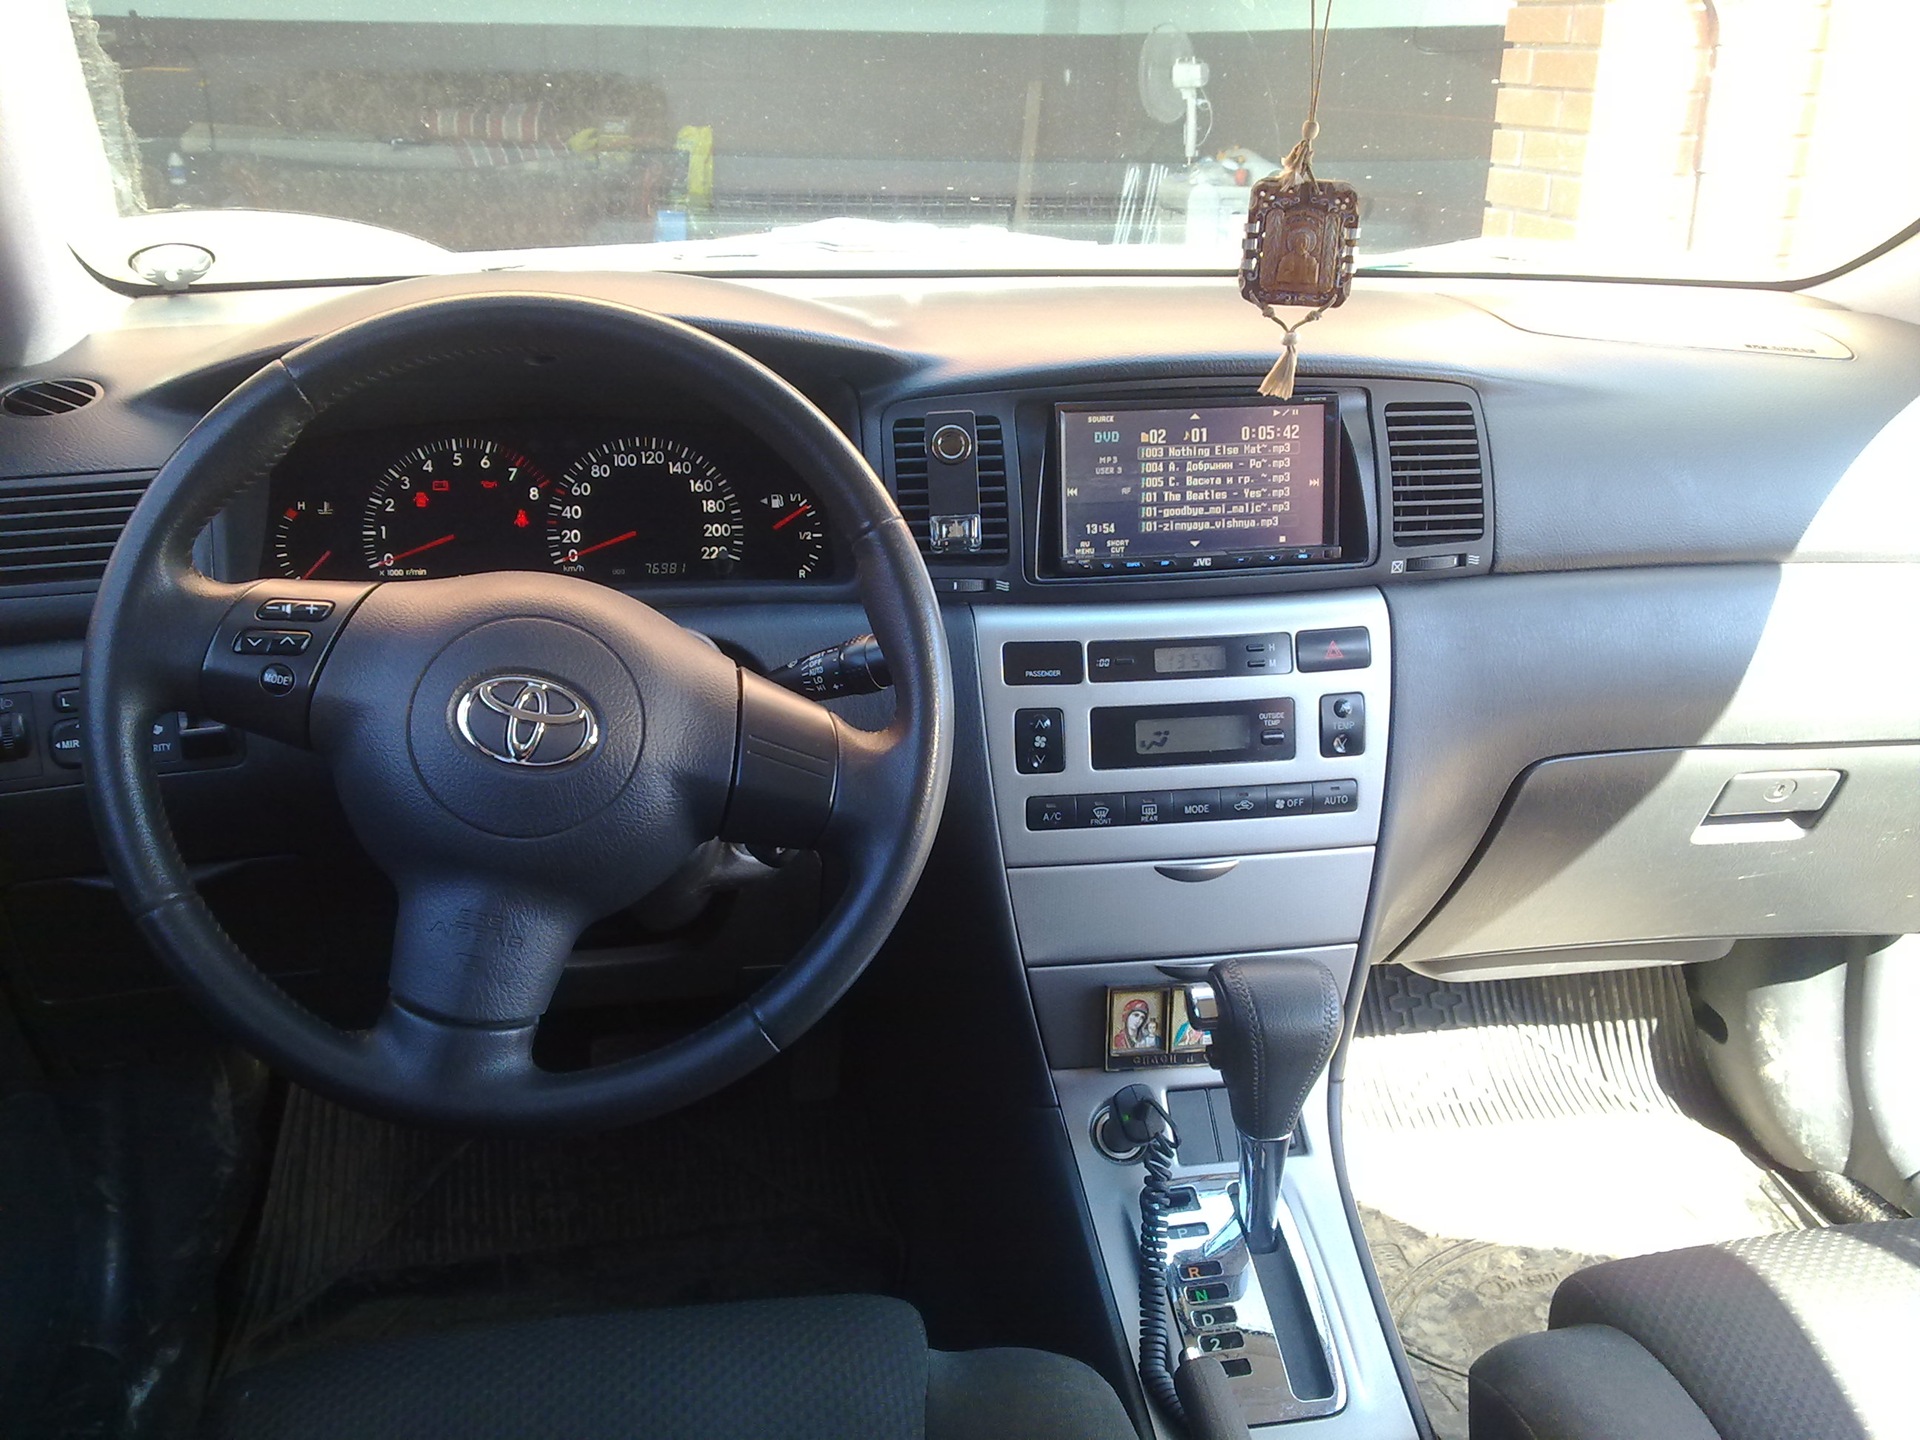 Replacing the radio - Toyota Corolla 16 liter 2006